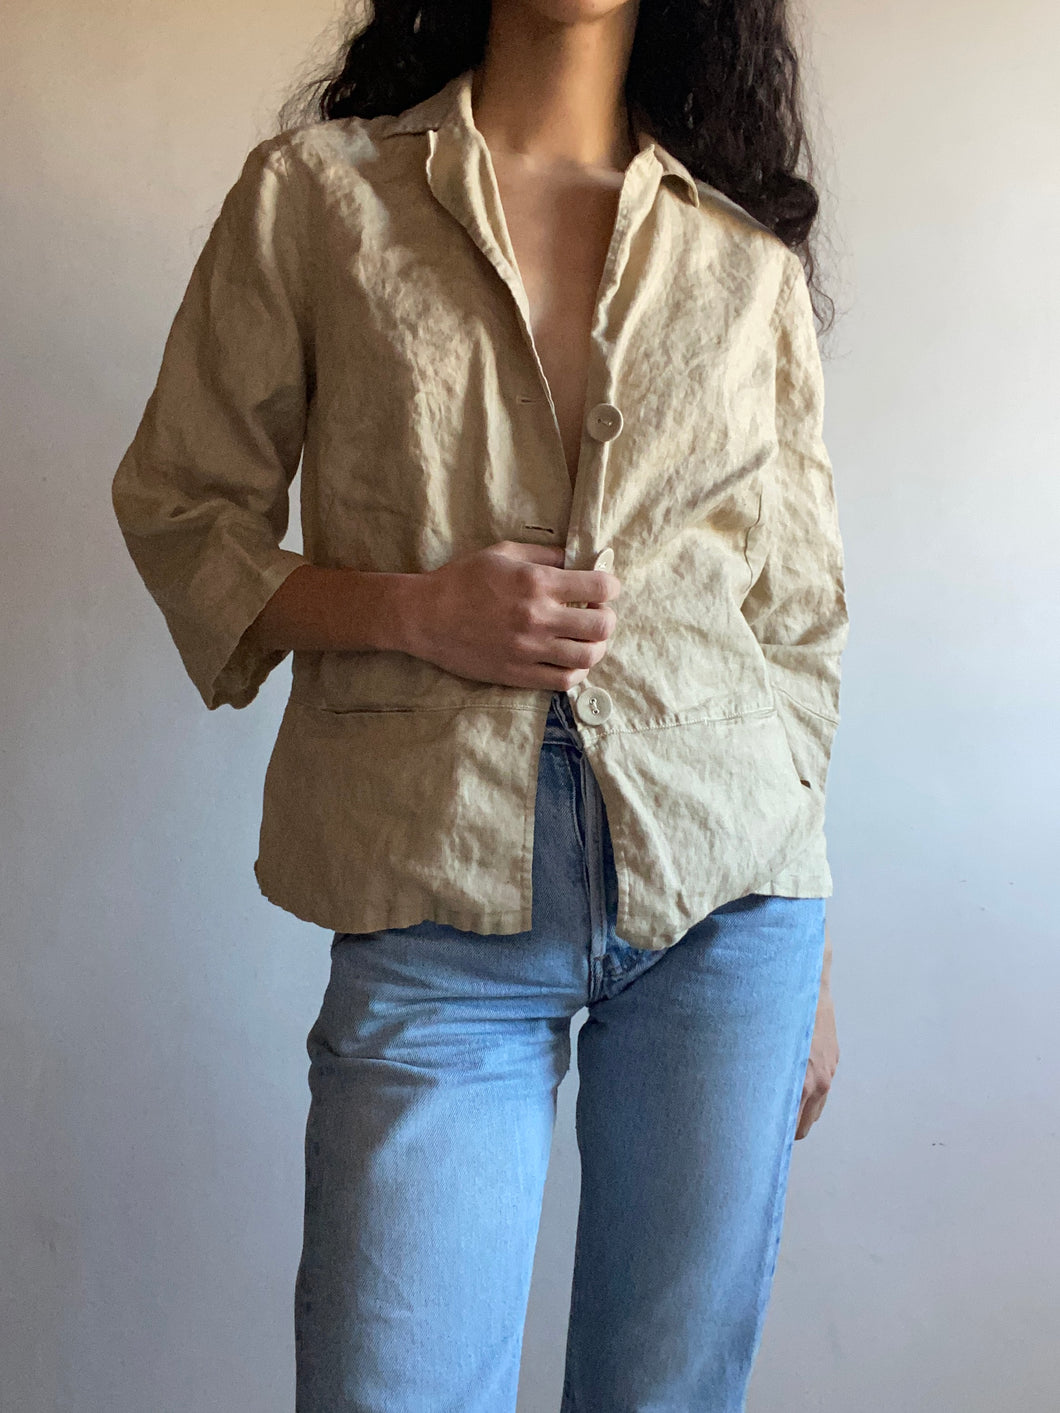 Vintage Linen Shirt-Jacket